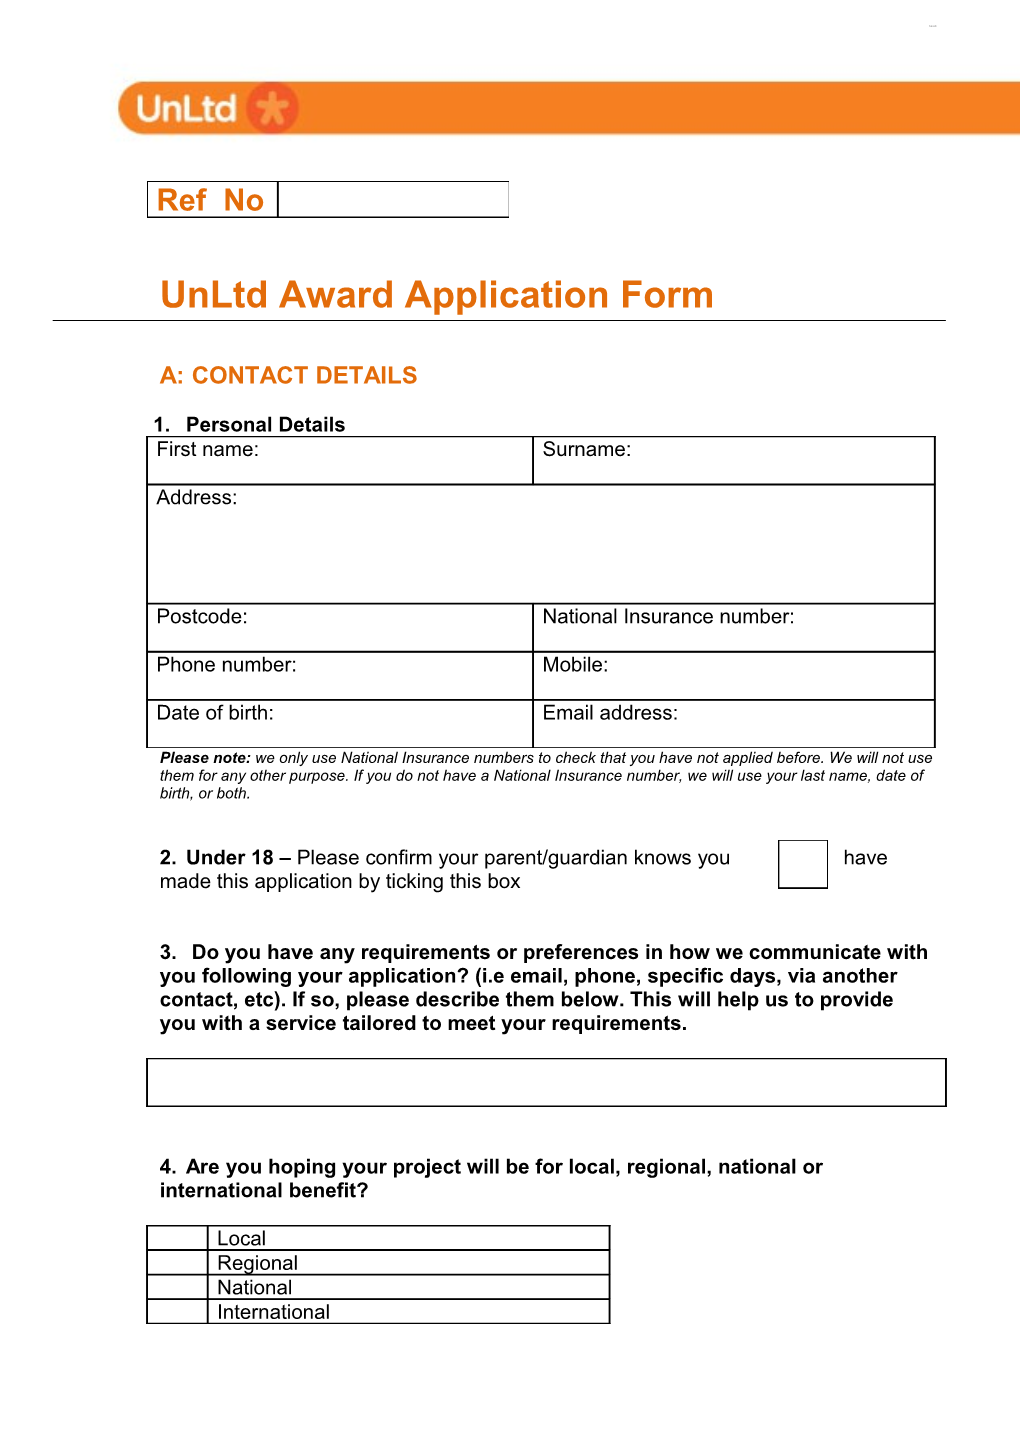 Unltd Award Application Form